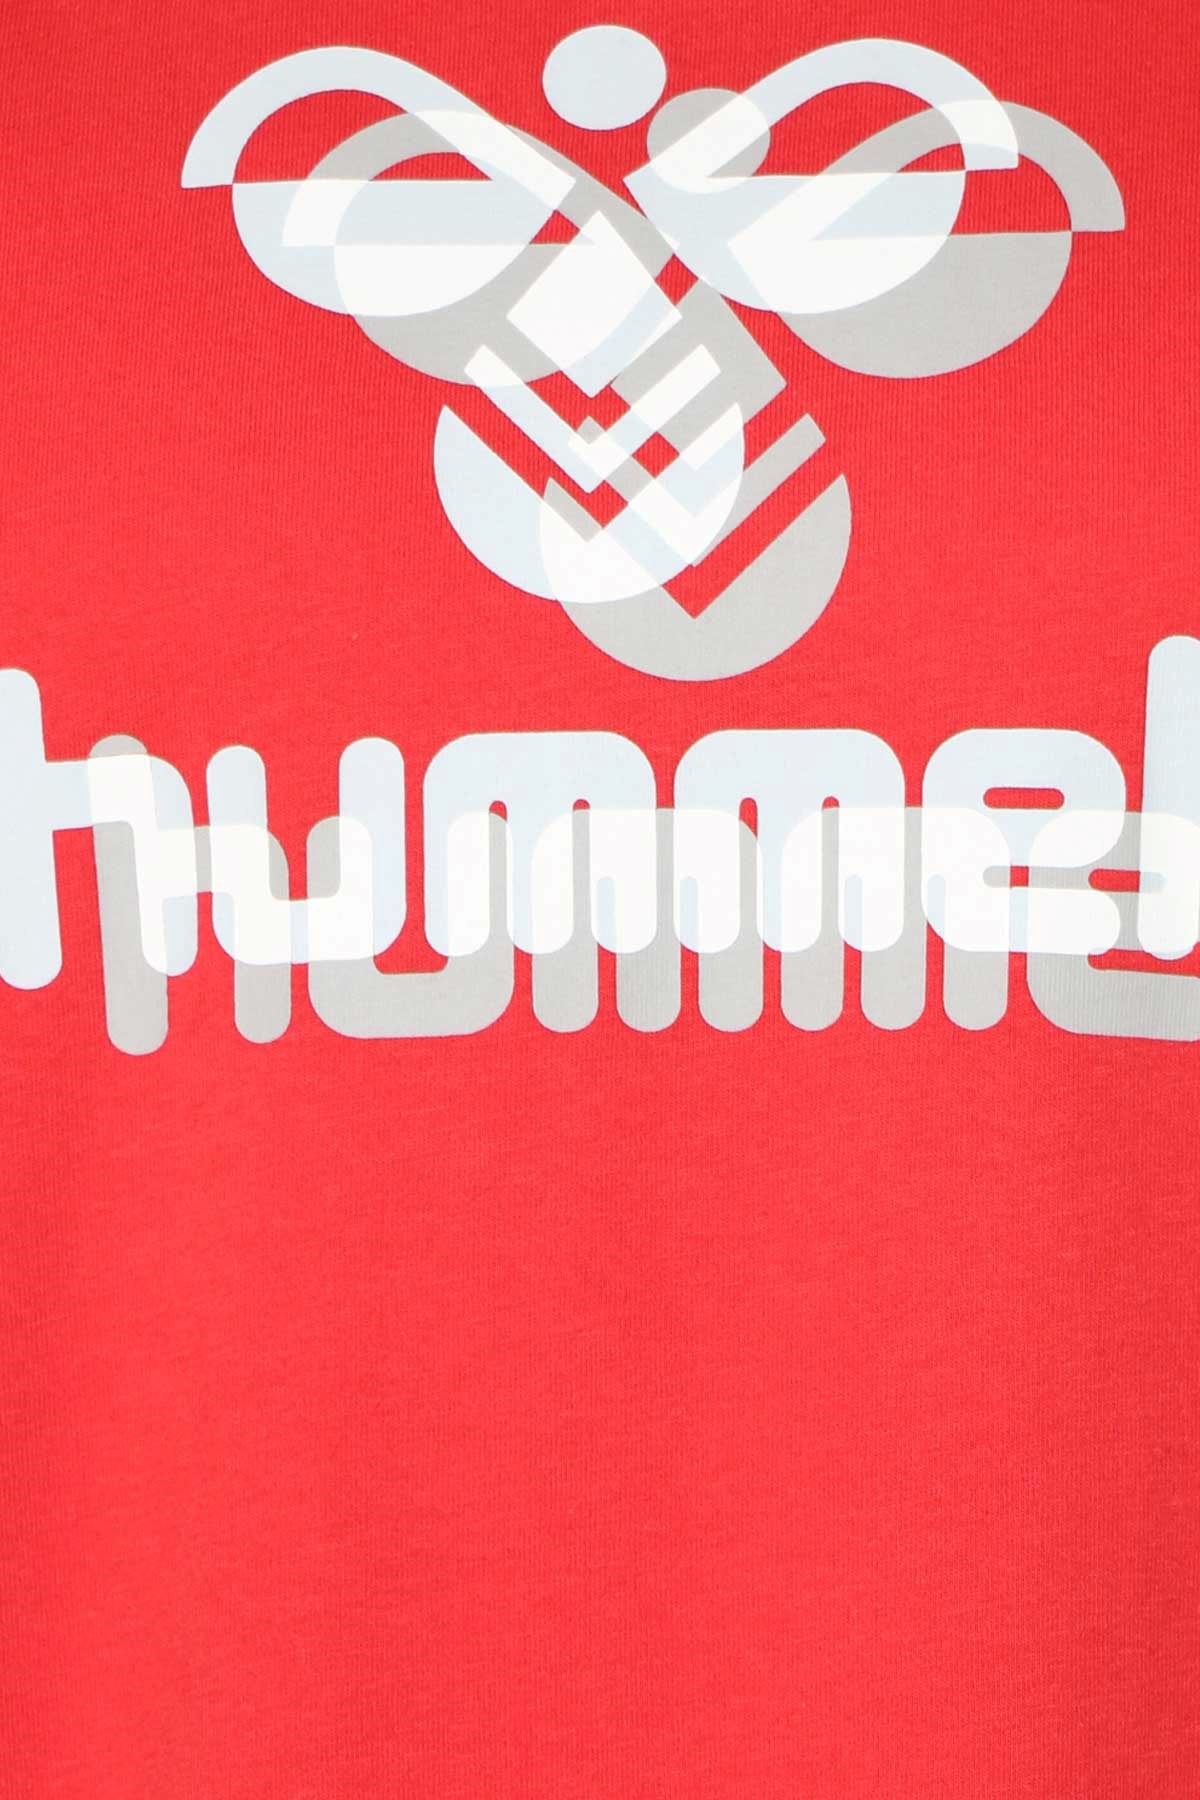 Hummel Hmlsenna T-Shırt S/S Erkek Kırmızı Tişört - 911702-2220